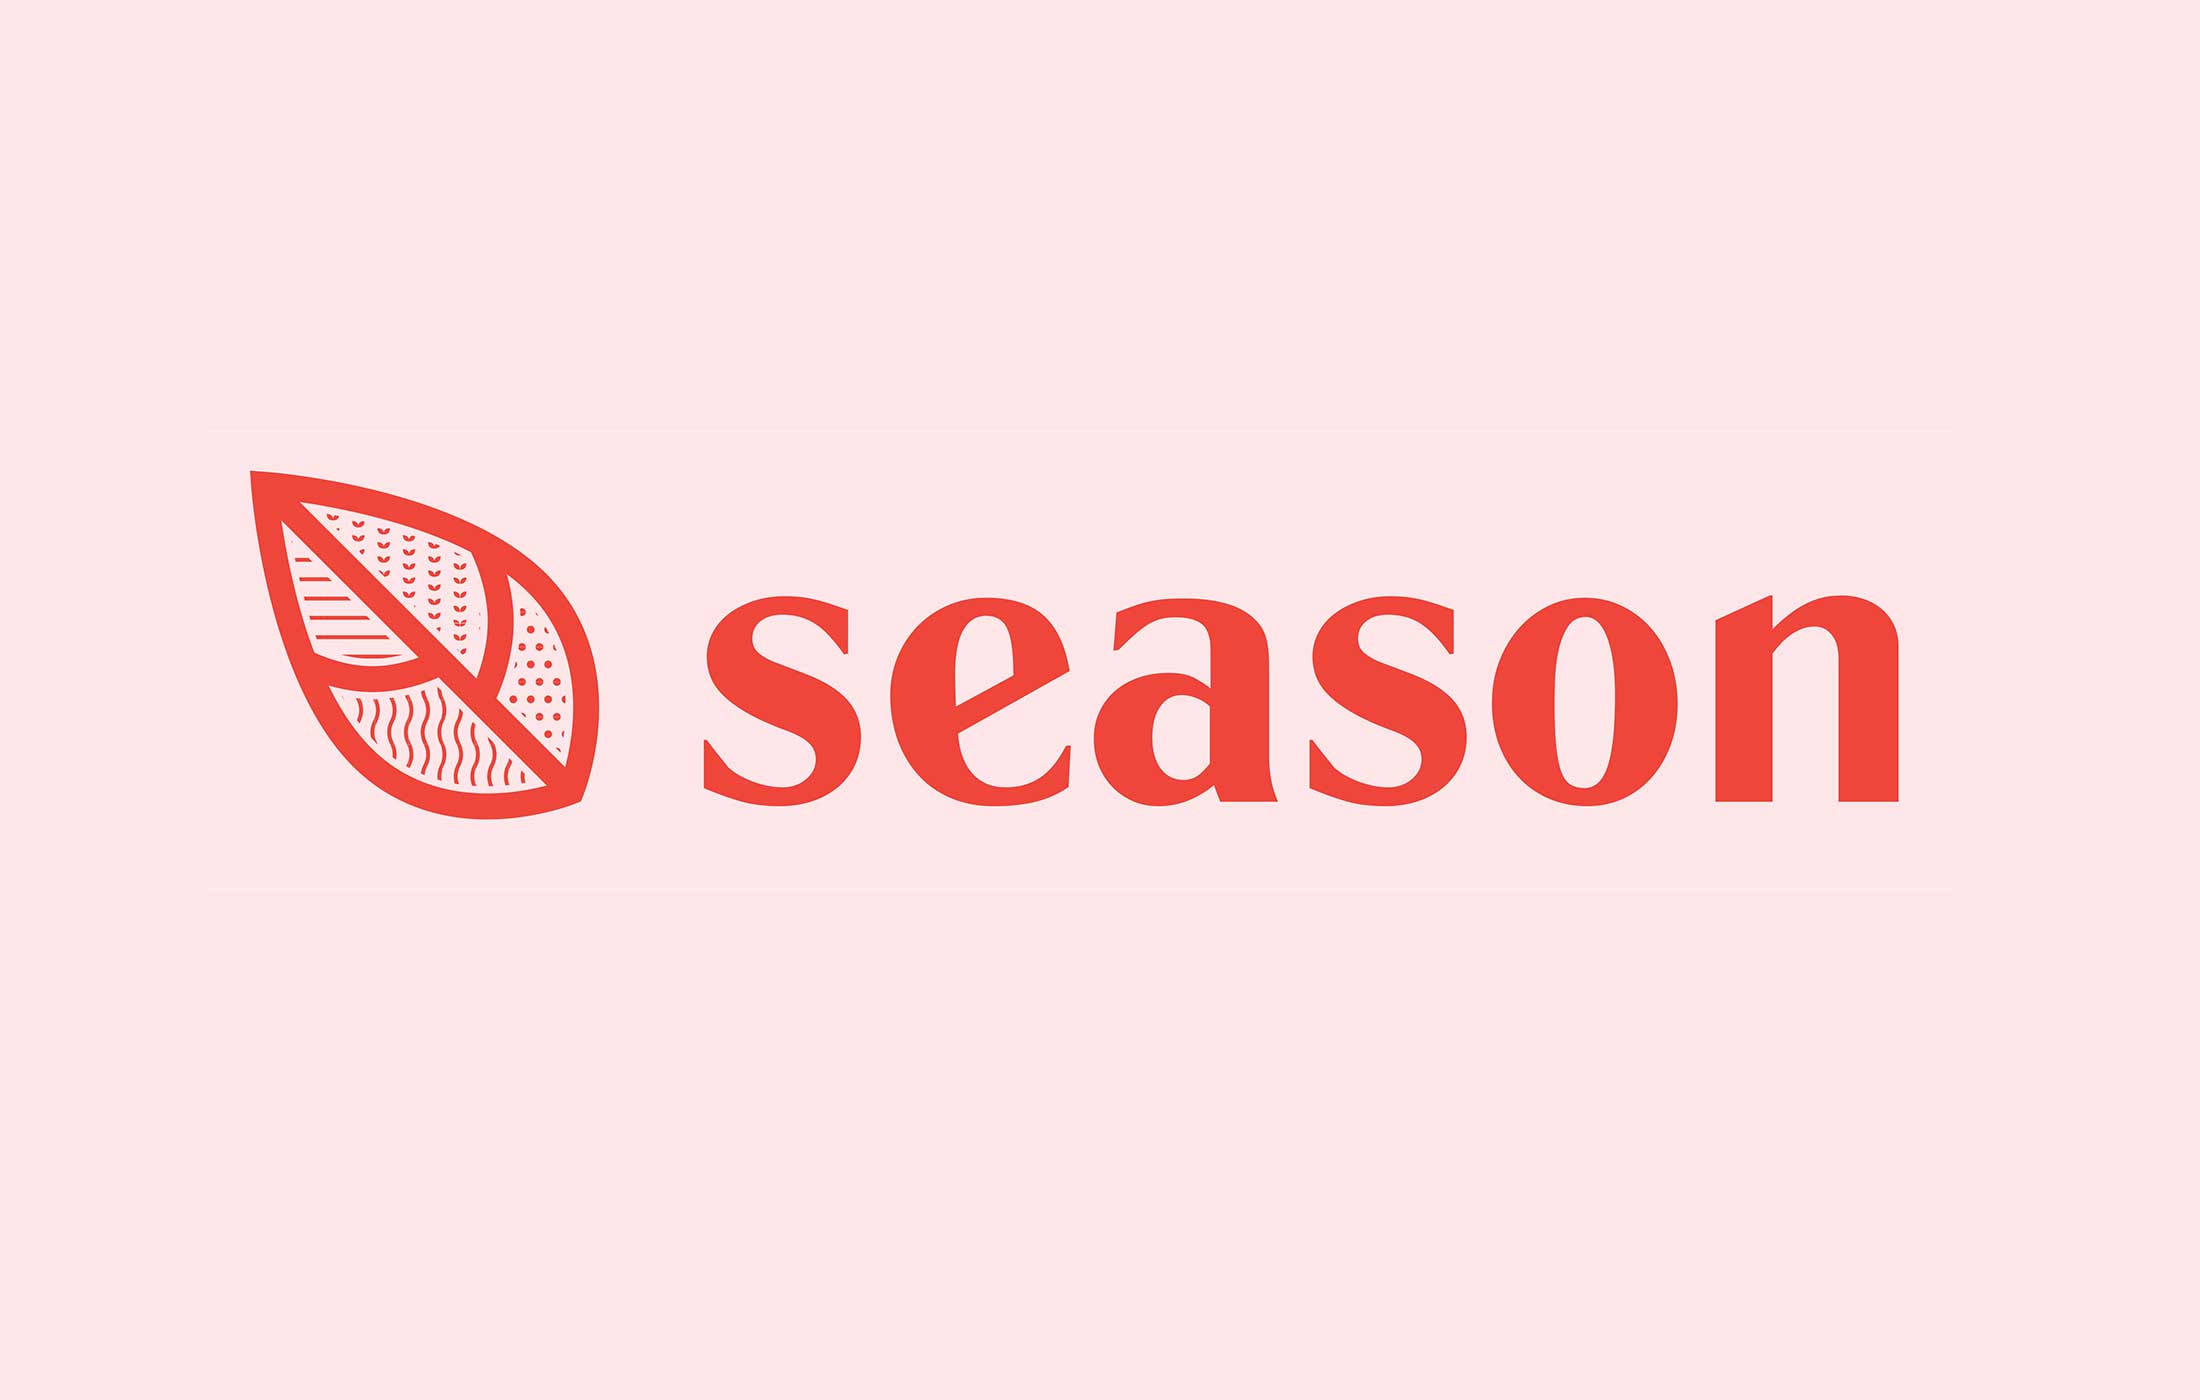 Season visual identity